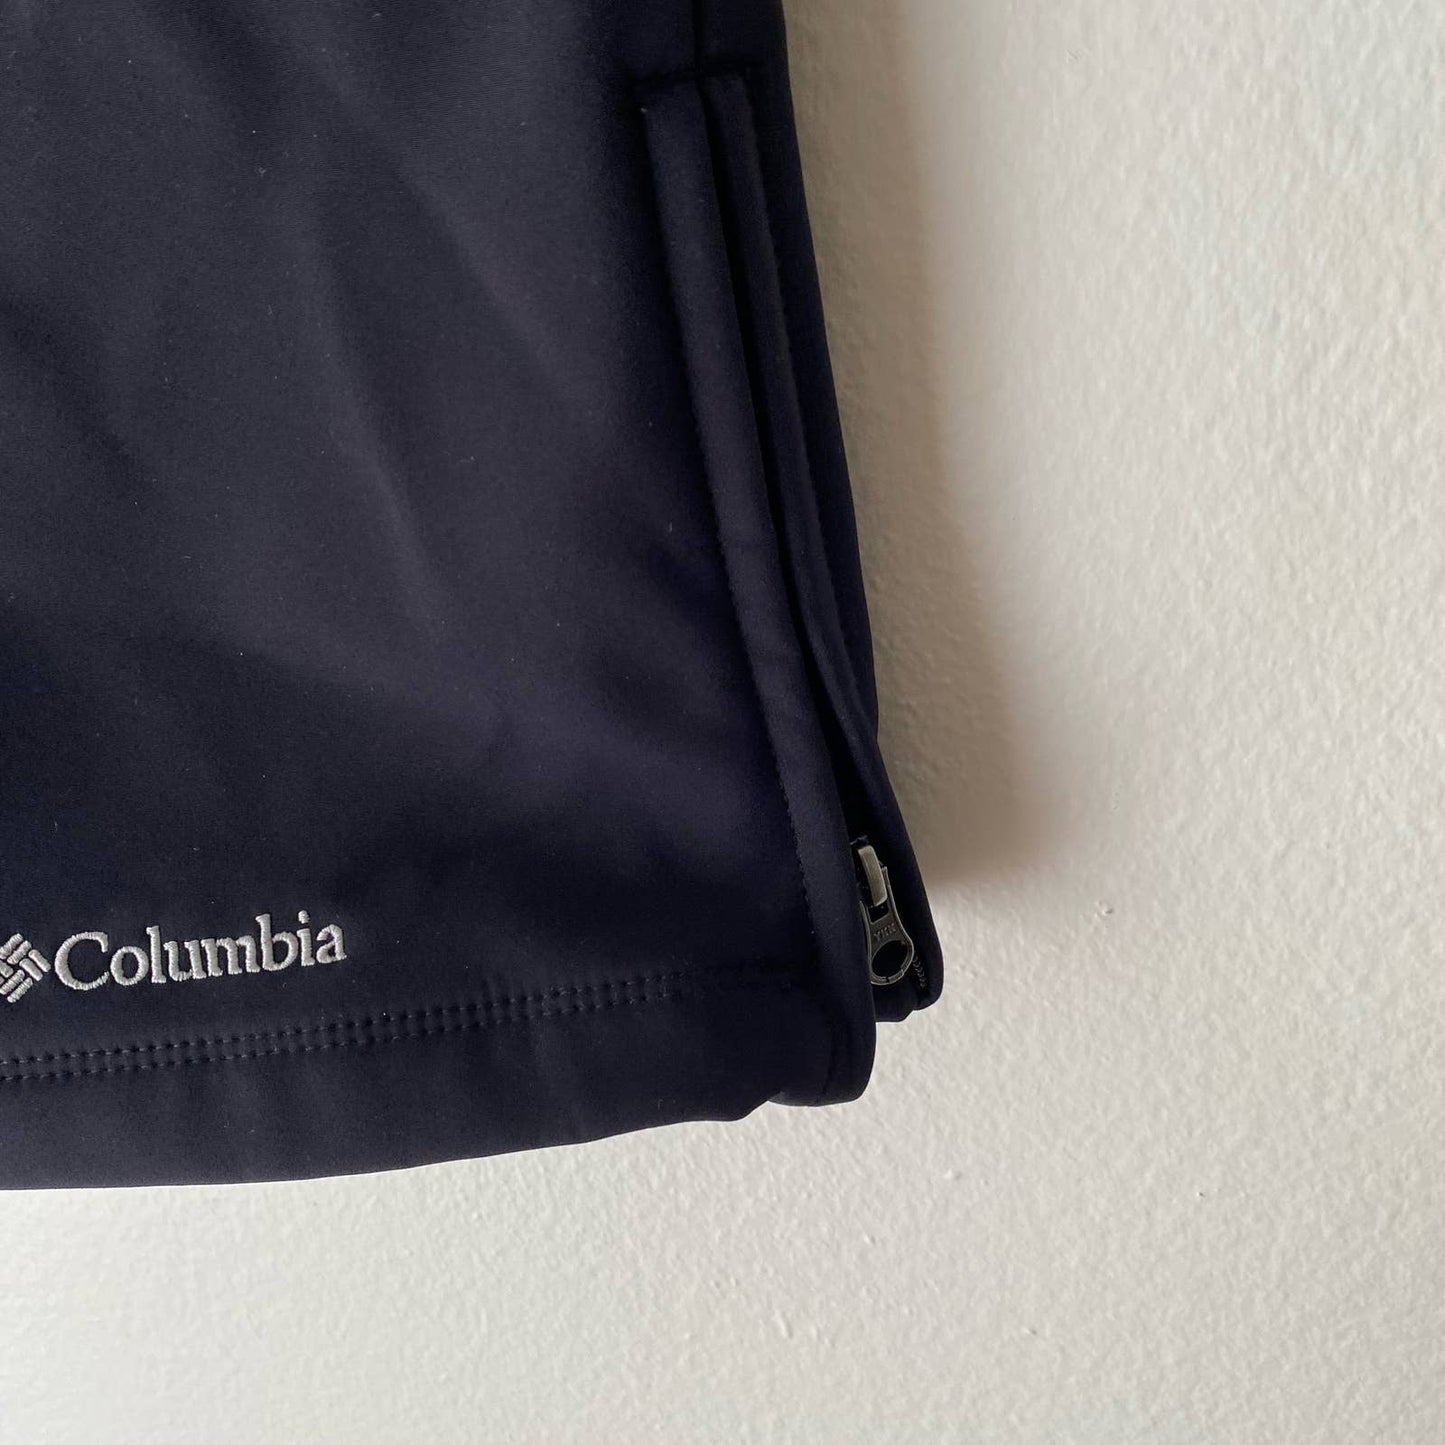 Columbia sz 2 Omni-wind block breathable wind proof ski pants